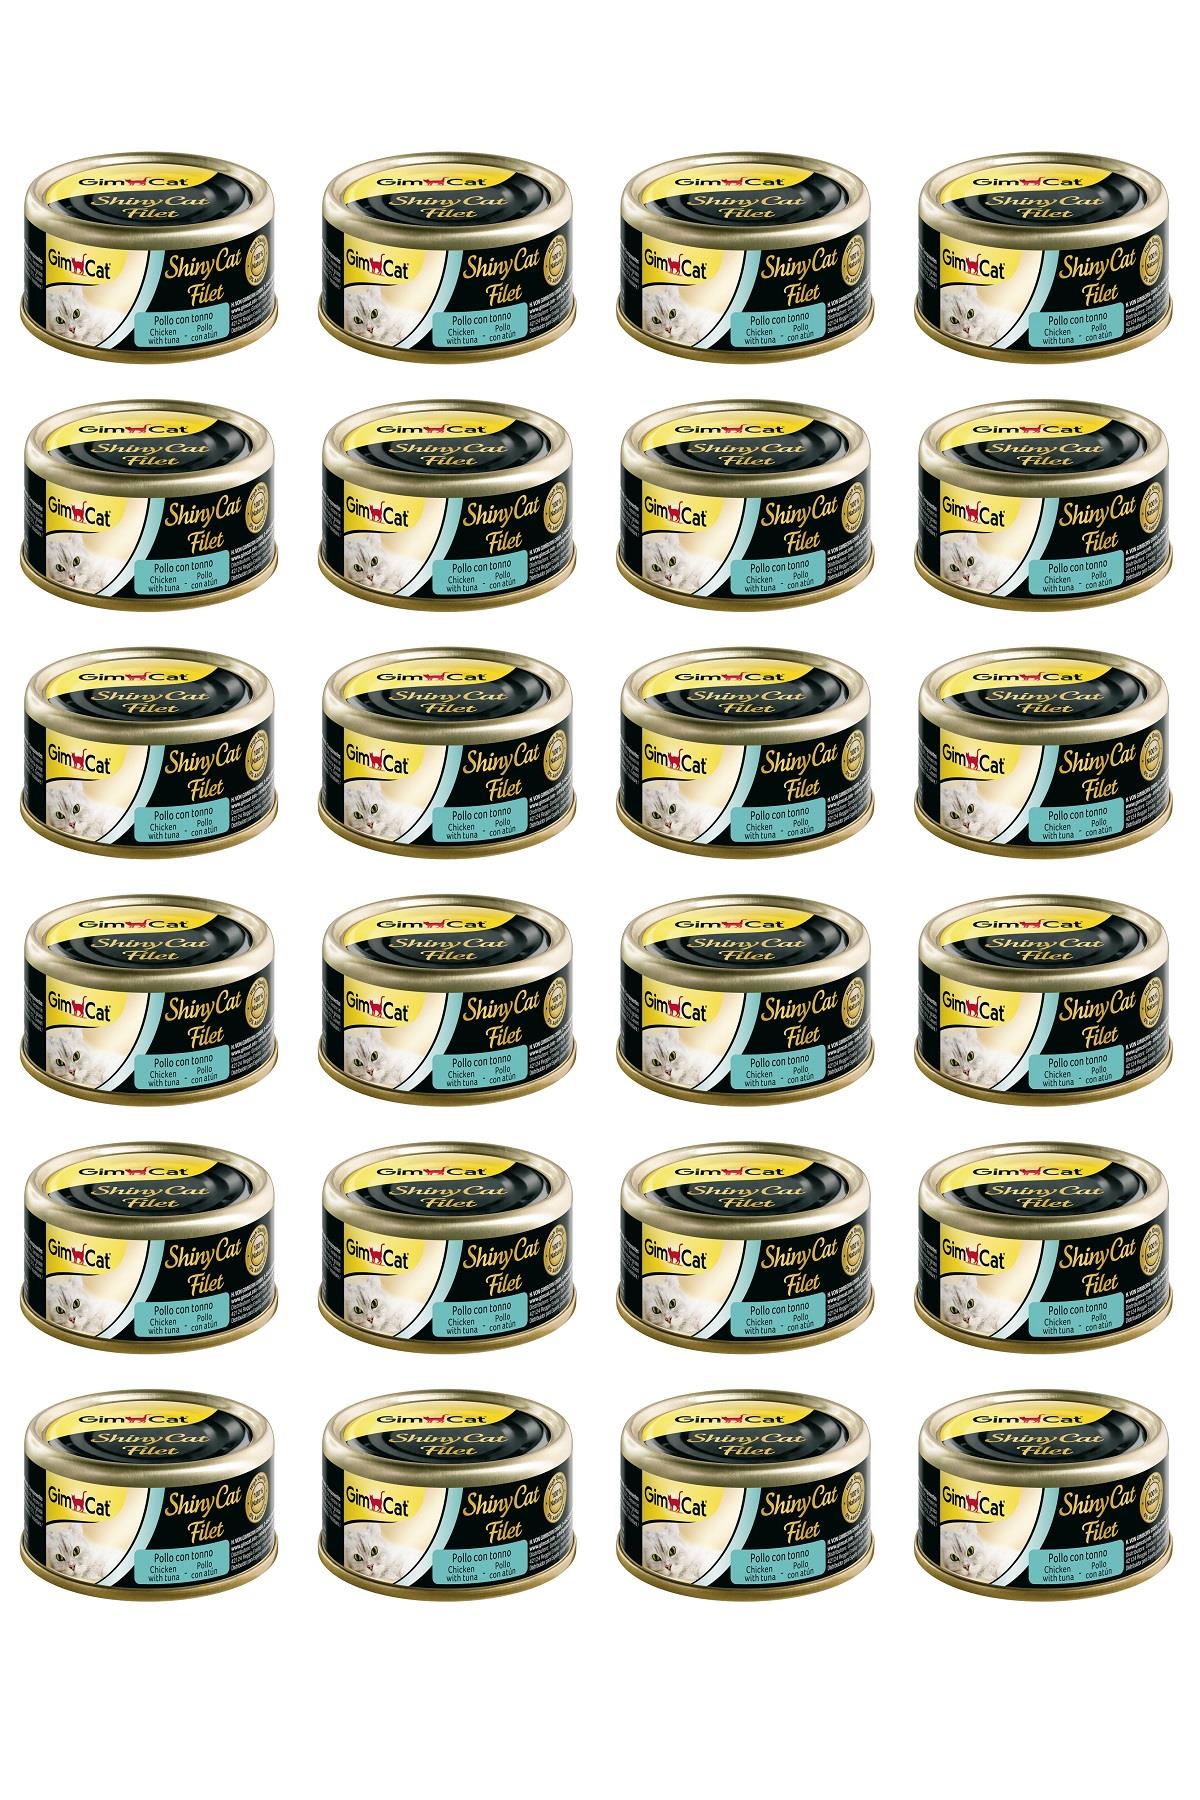 Gimcat Shinycat Tavuklu Tuna Balıklı Fileto Konserve Kedi Maması 70 gr x 24 Adet